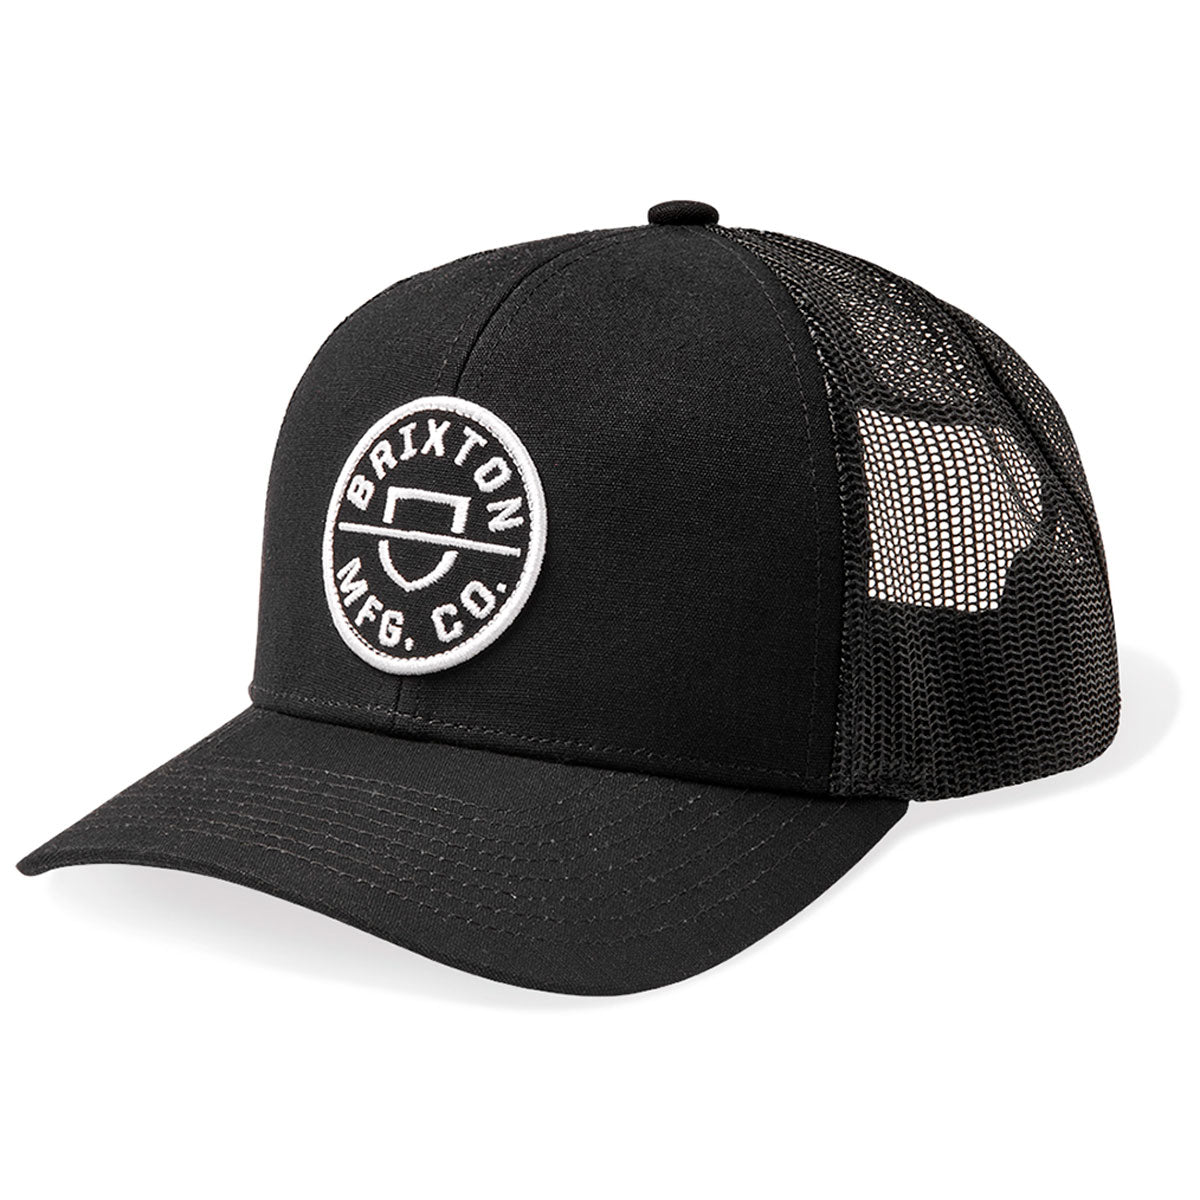 Brixton Crest X Mp Mesh Hat - Black/Black image 1